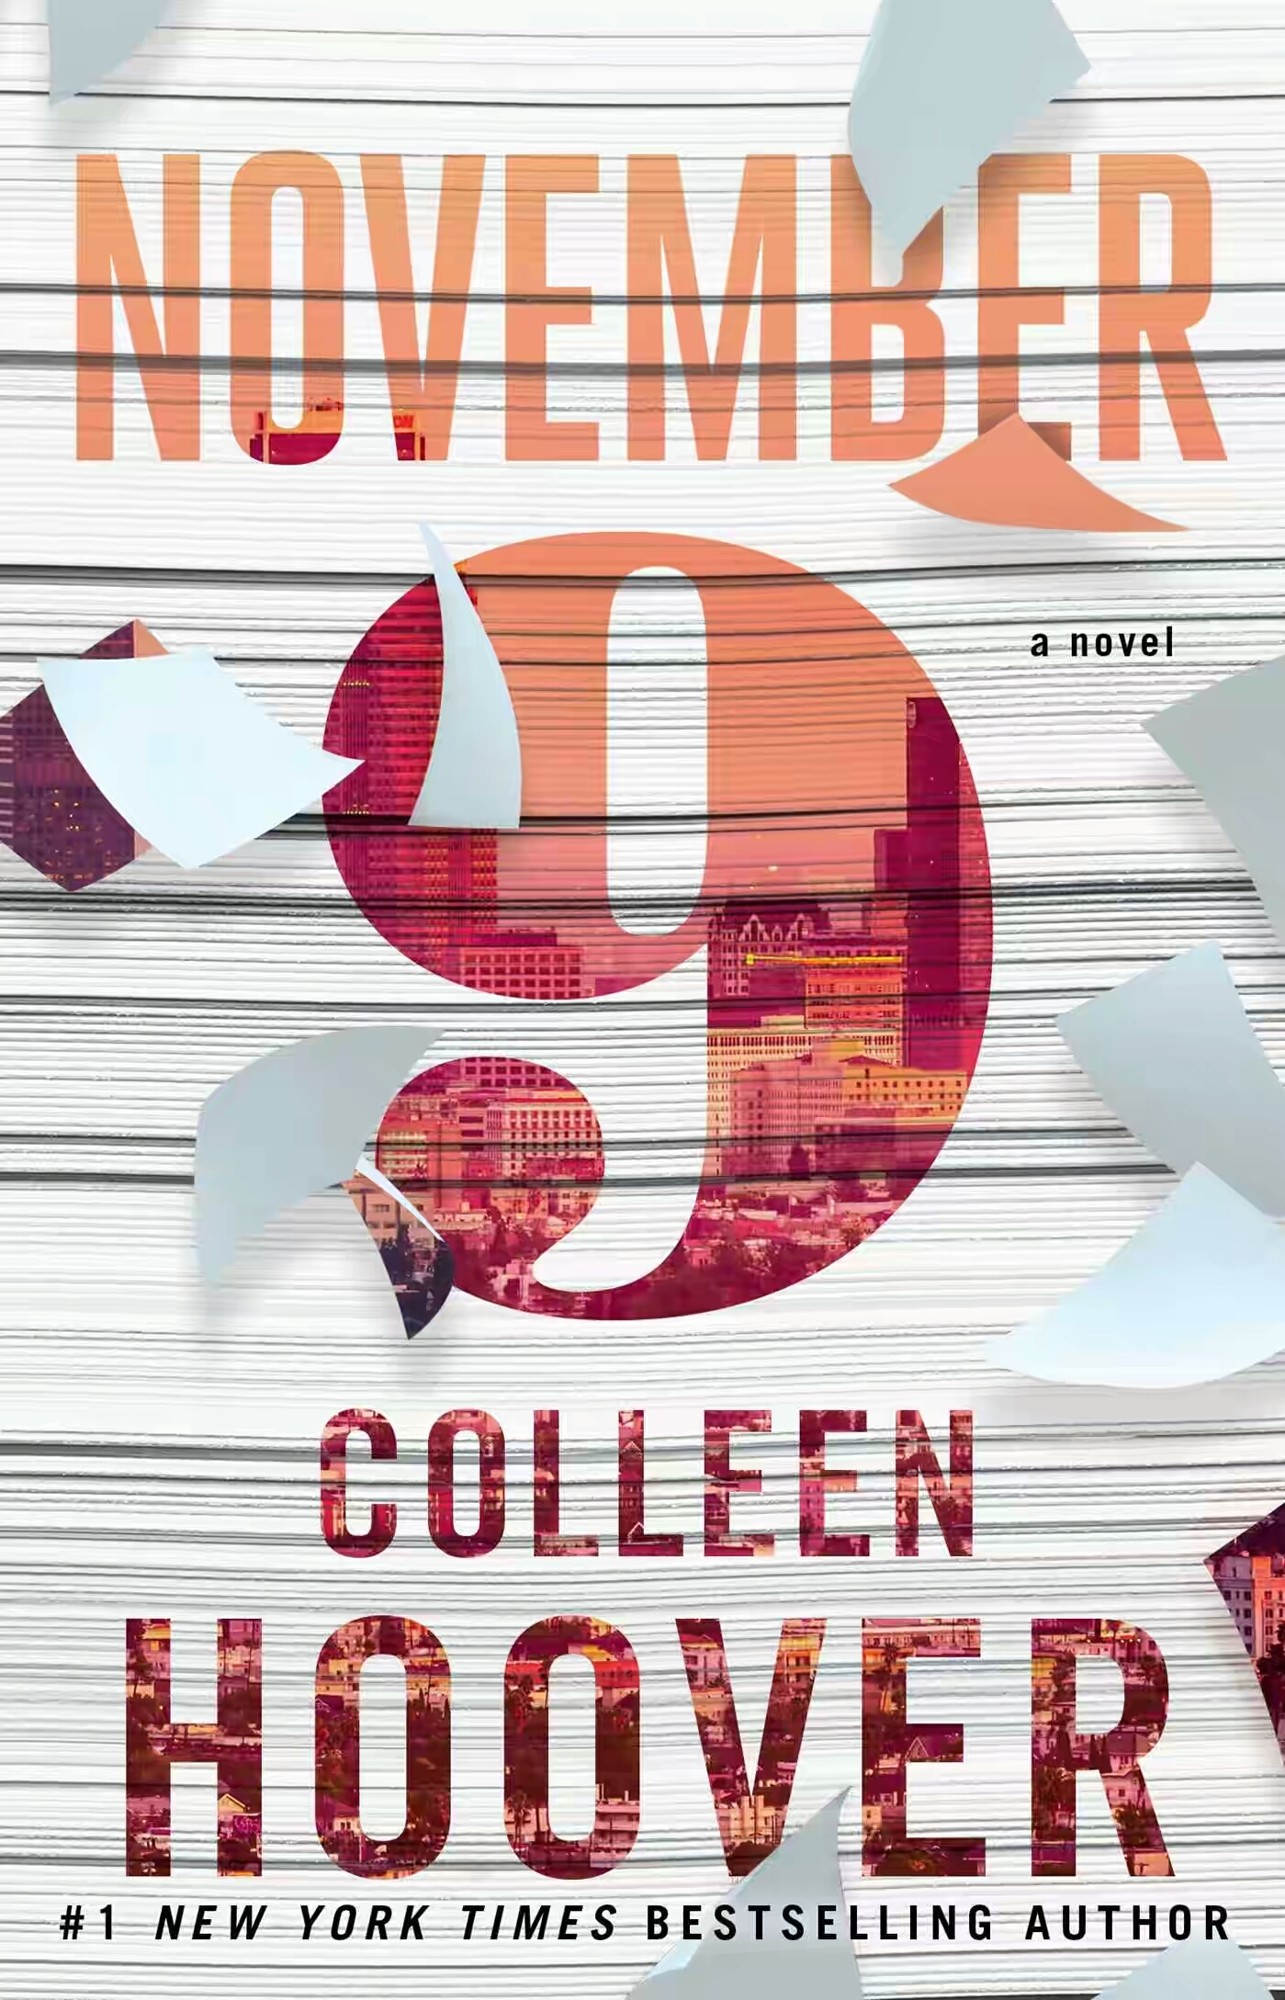 November 9 – Colleen Hoover